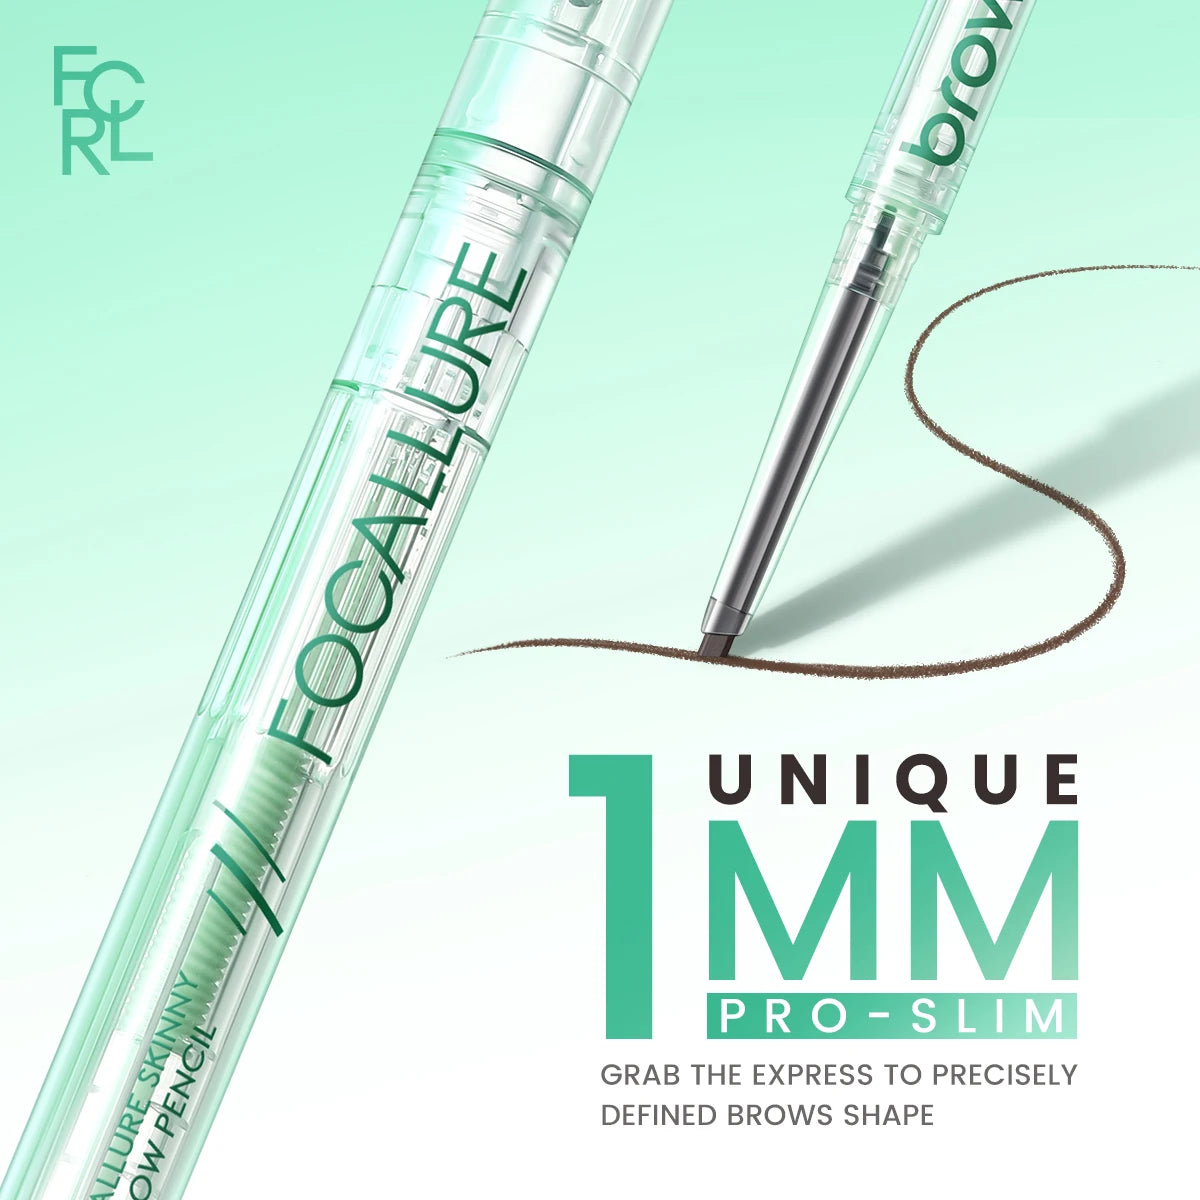 Focallure Pro-slim Precise Defining Eyebrow Pencil 1MM